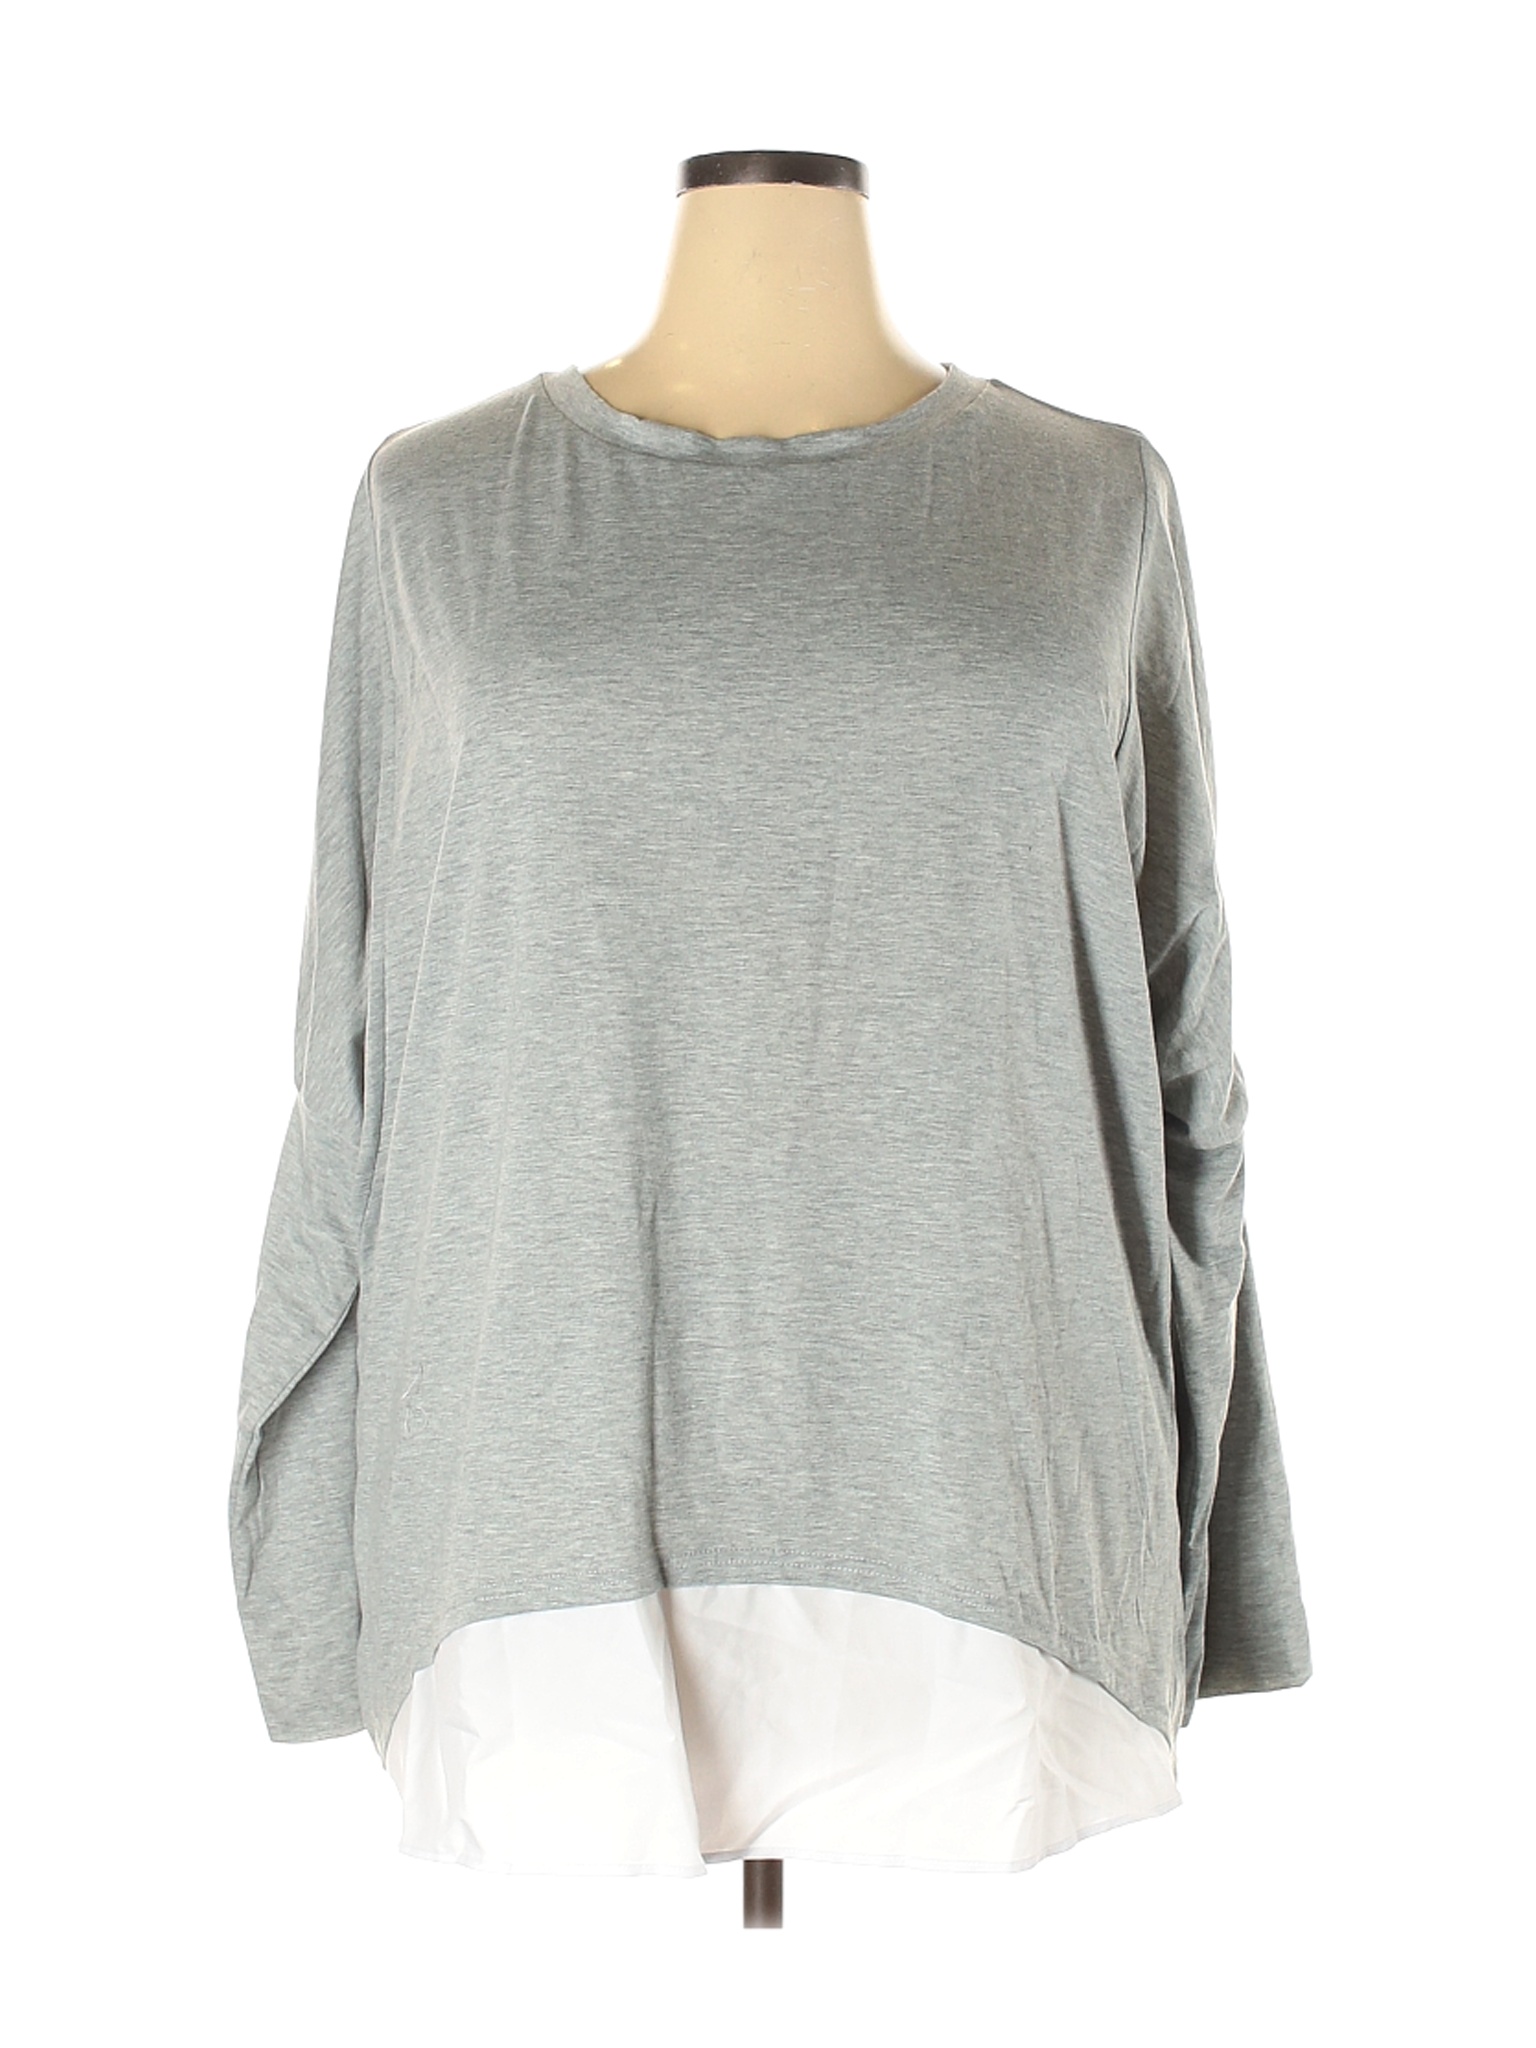 Unbranded Women Gray Long Sleeve Top XXL | eBay